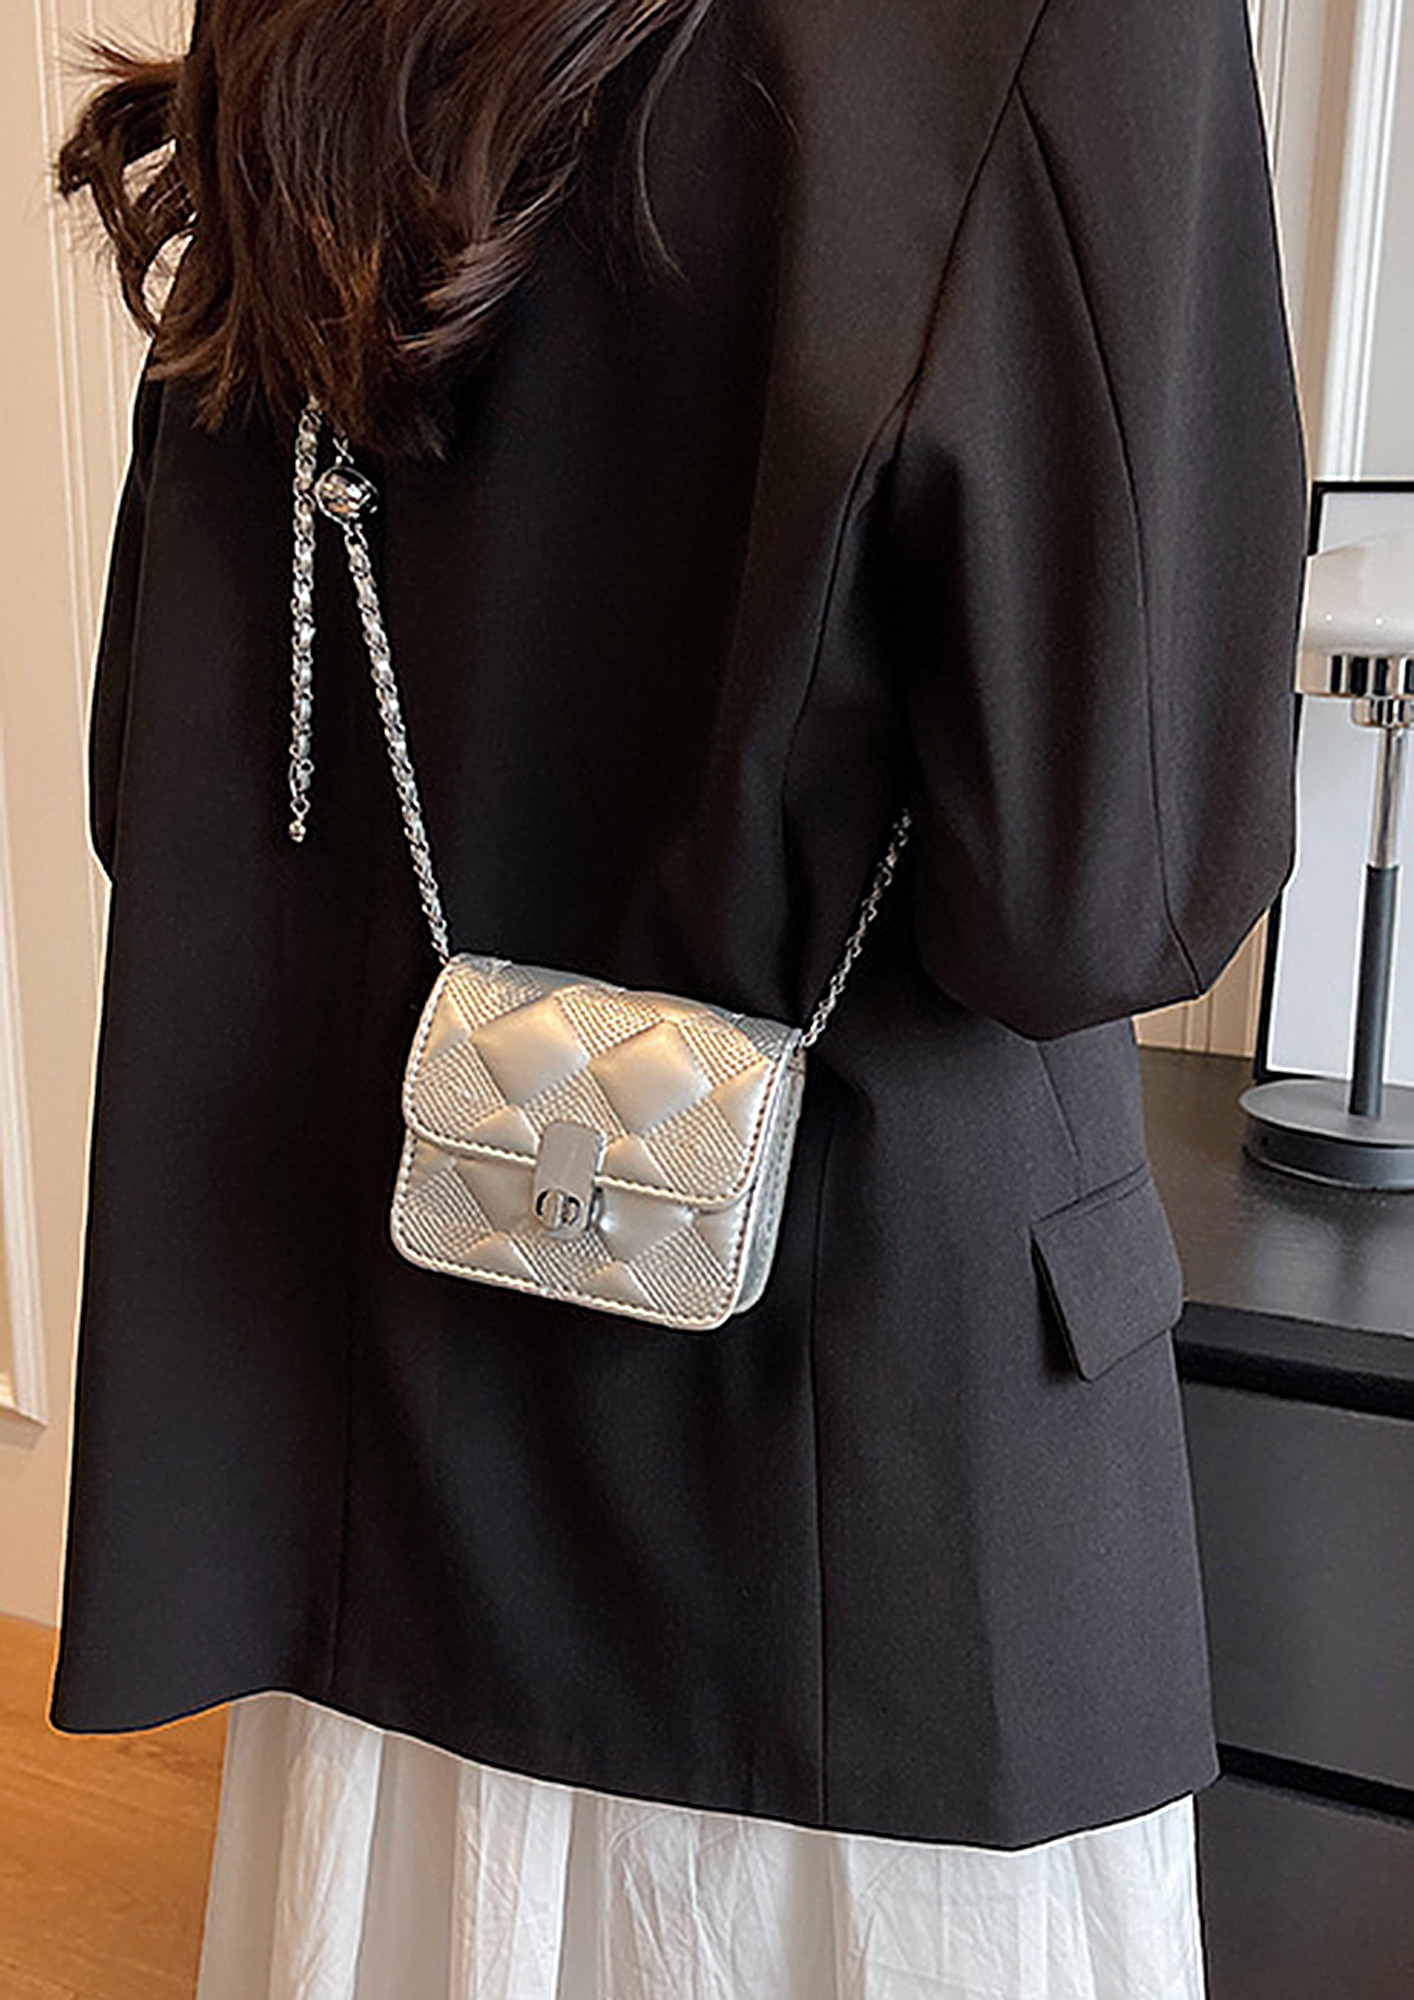 Lacoste Small Sling Bag | eBay